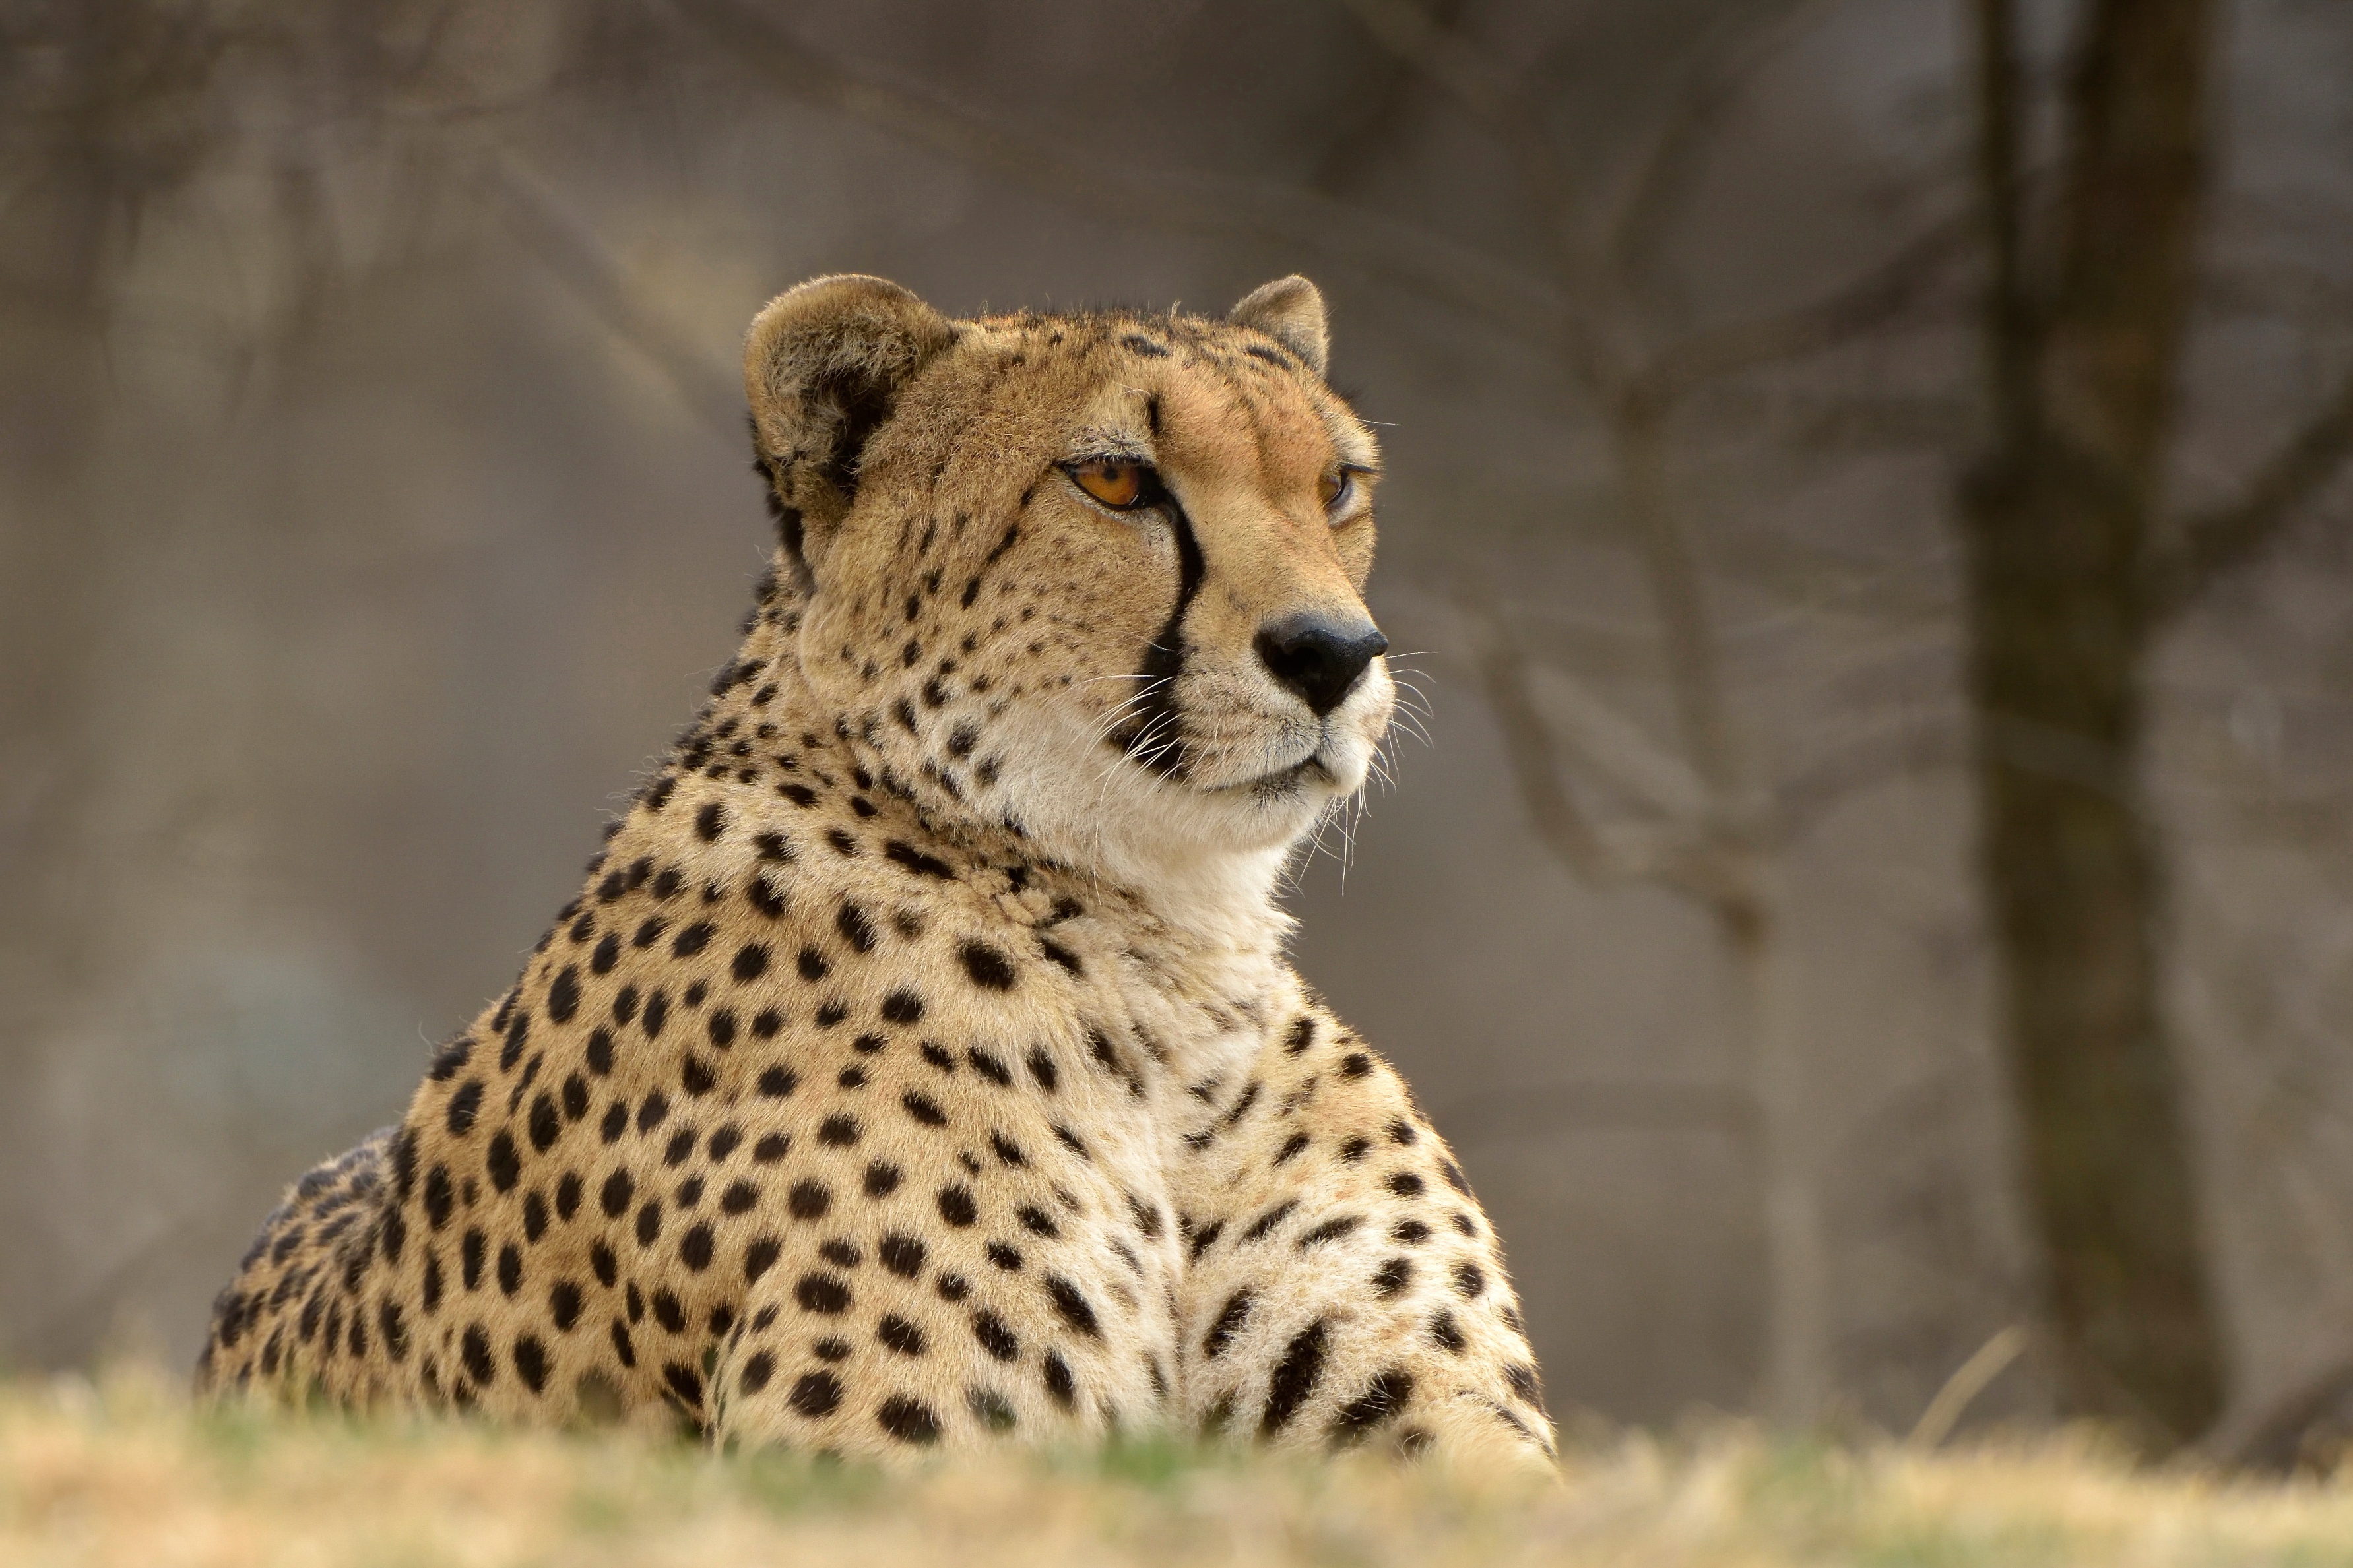 Big Cat Cheetah Wildlife Predator Animal 3566x2377